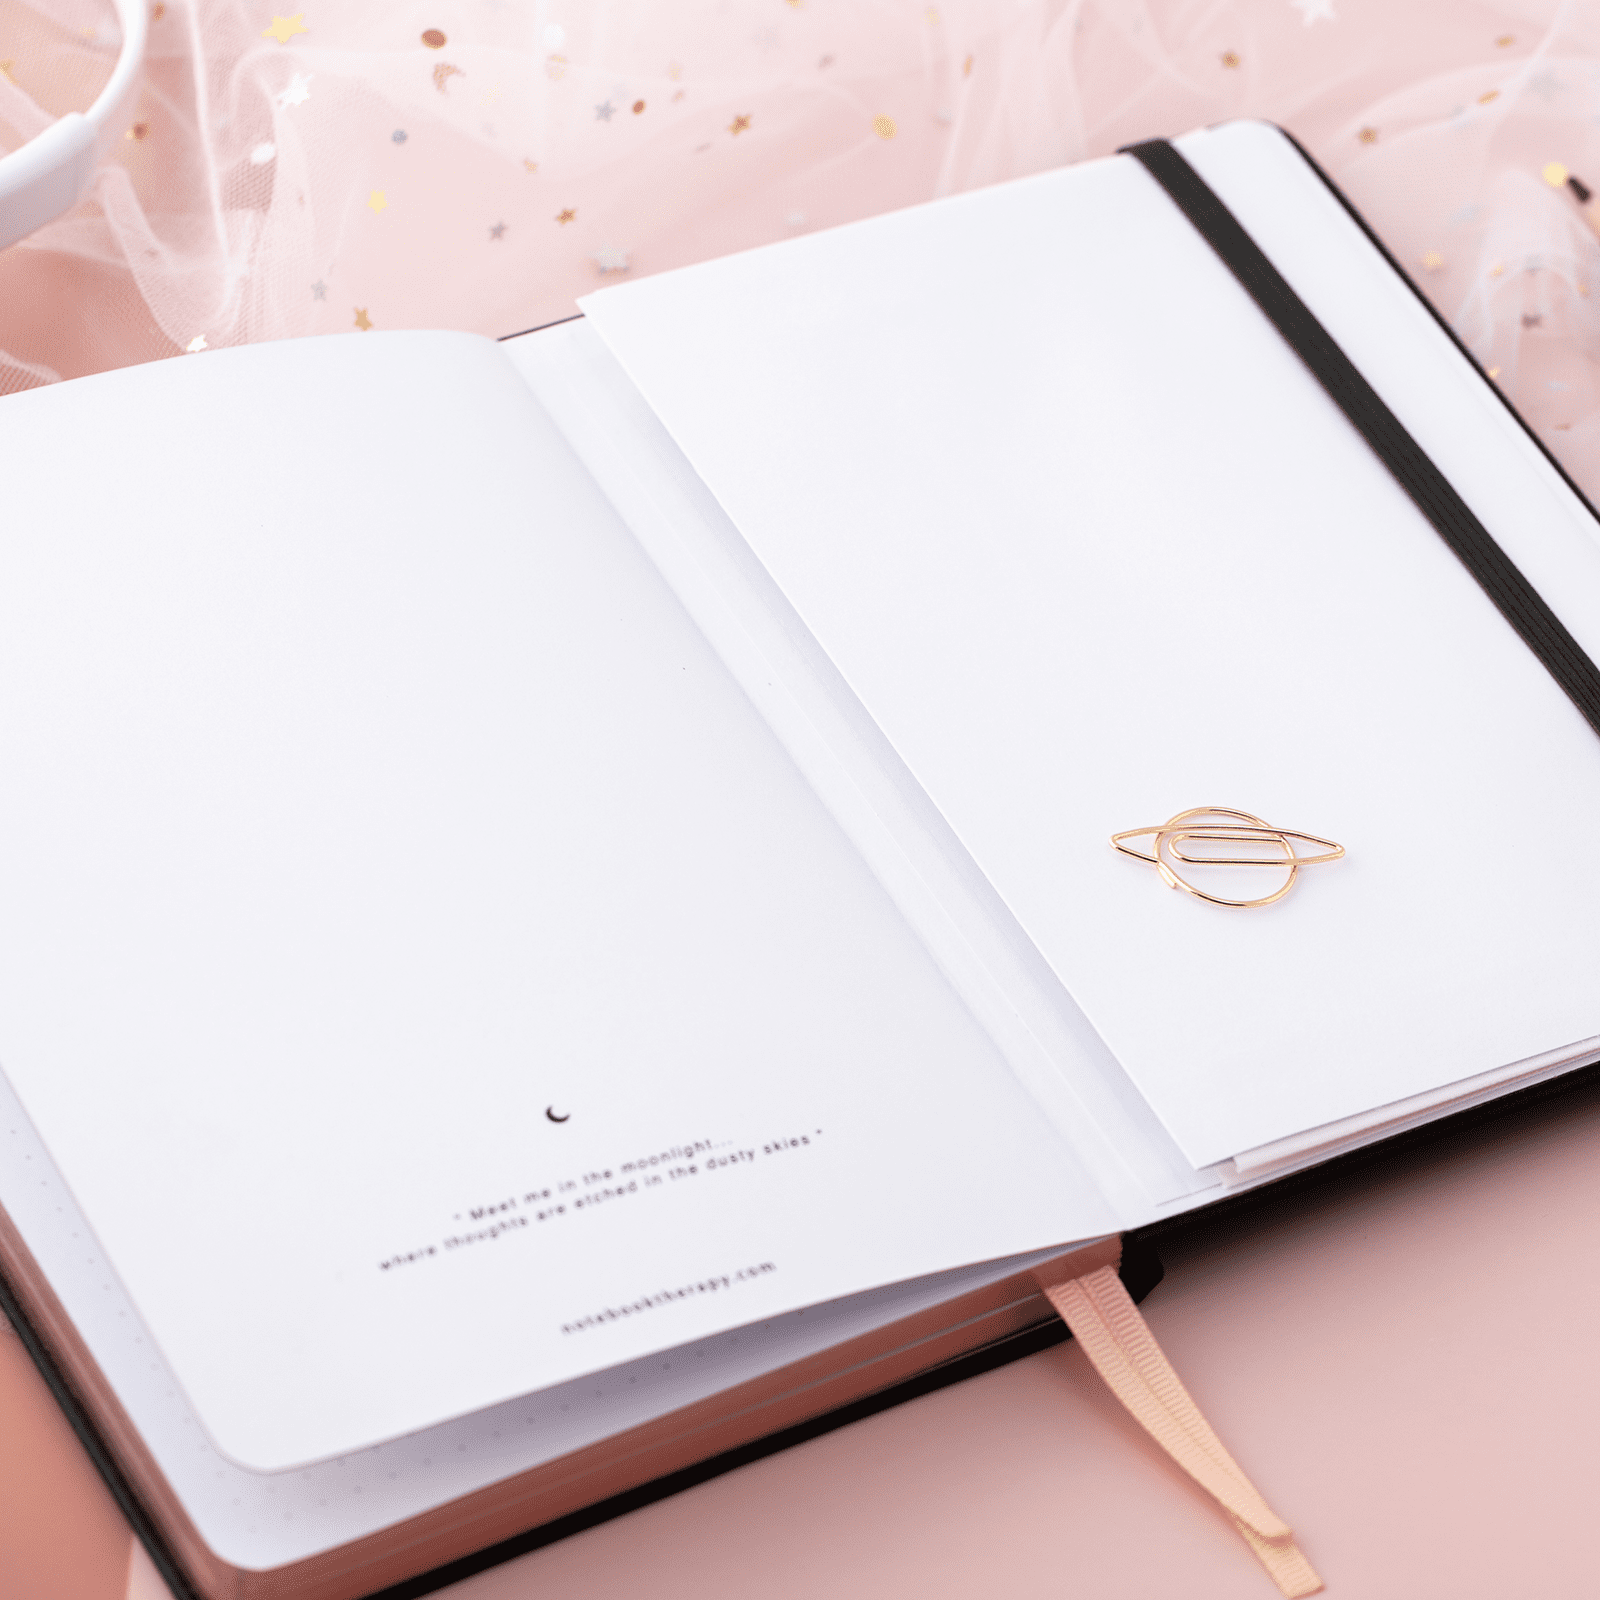 Tsuki 'Night time' Galaxy Bullet Journal ☾ – NotebookTherapy